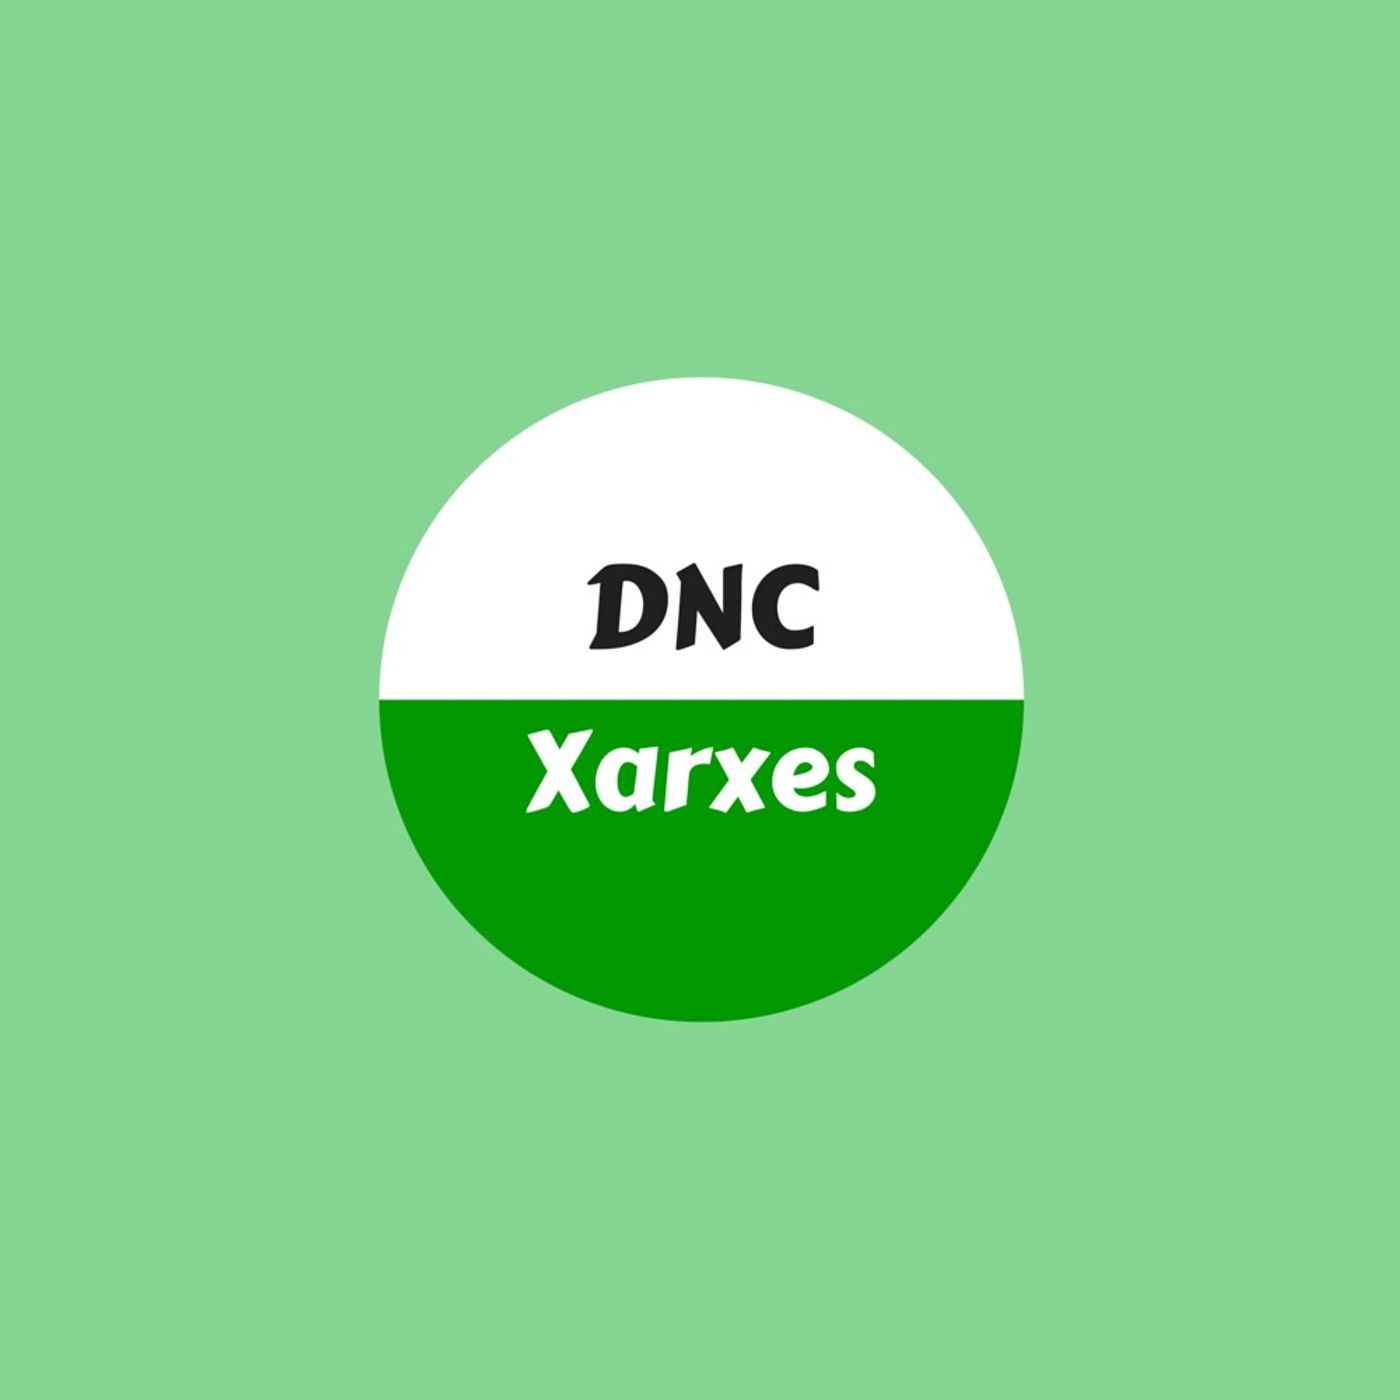 DNC Xarxes's tracks